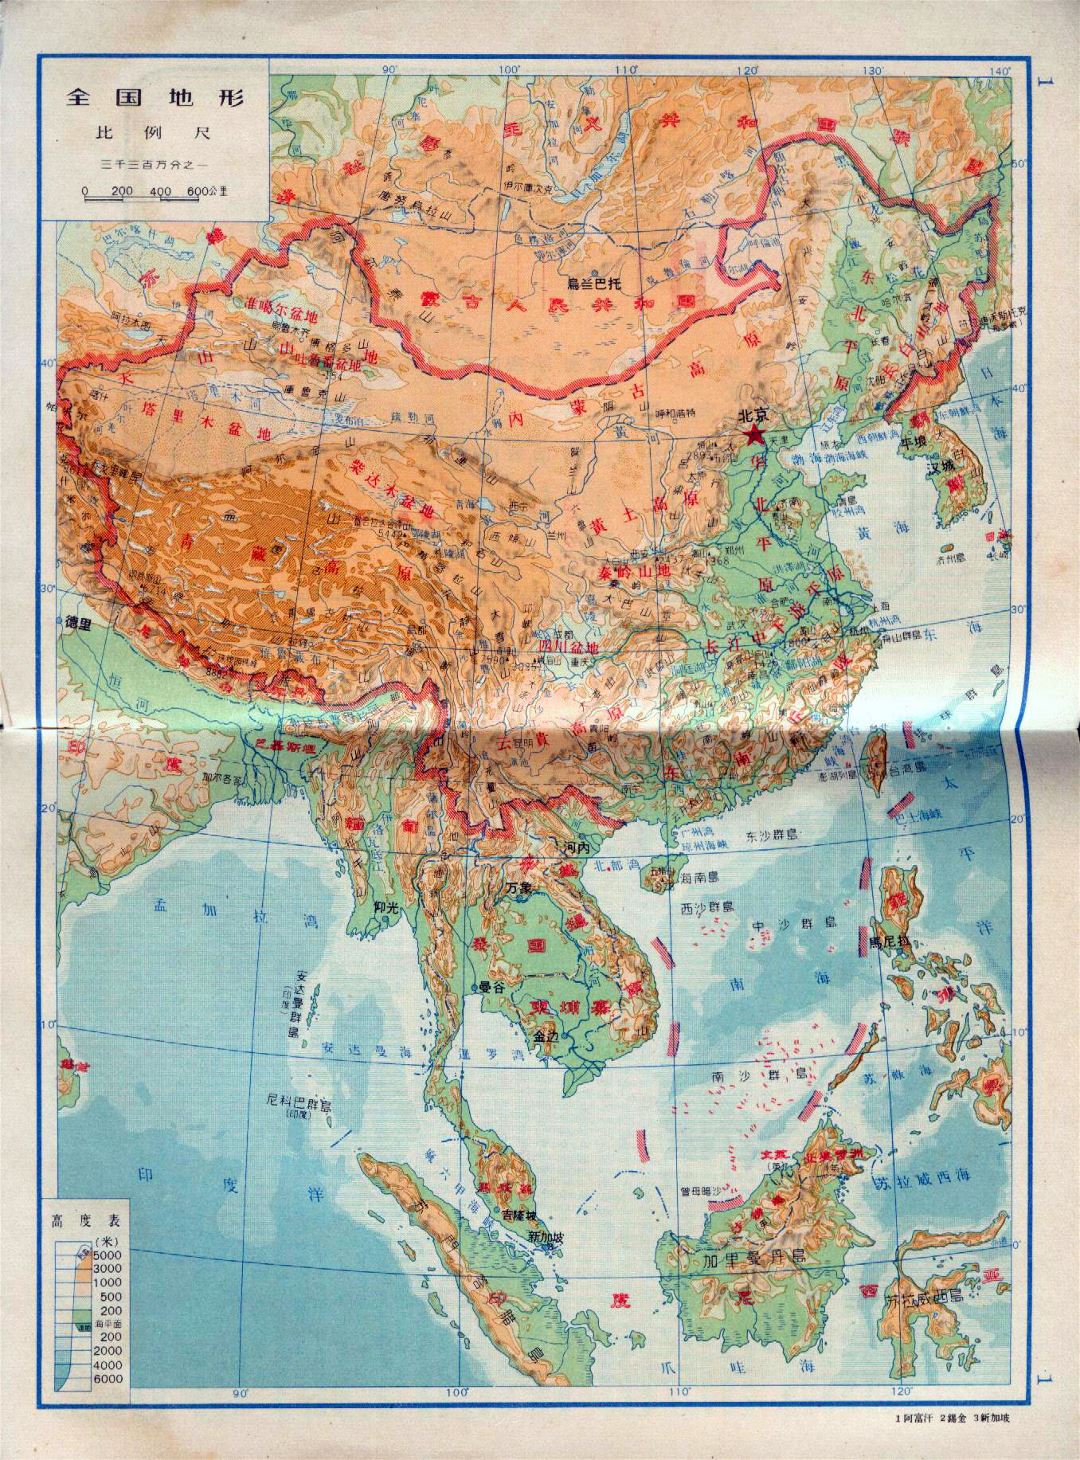 Detallado mapa físico de China - 1963 en chino